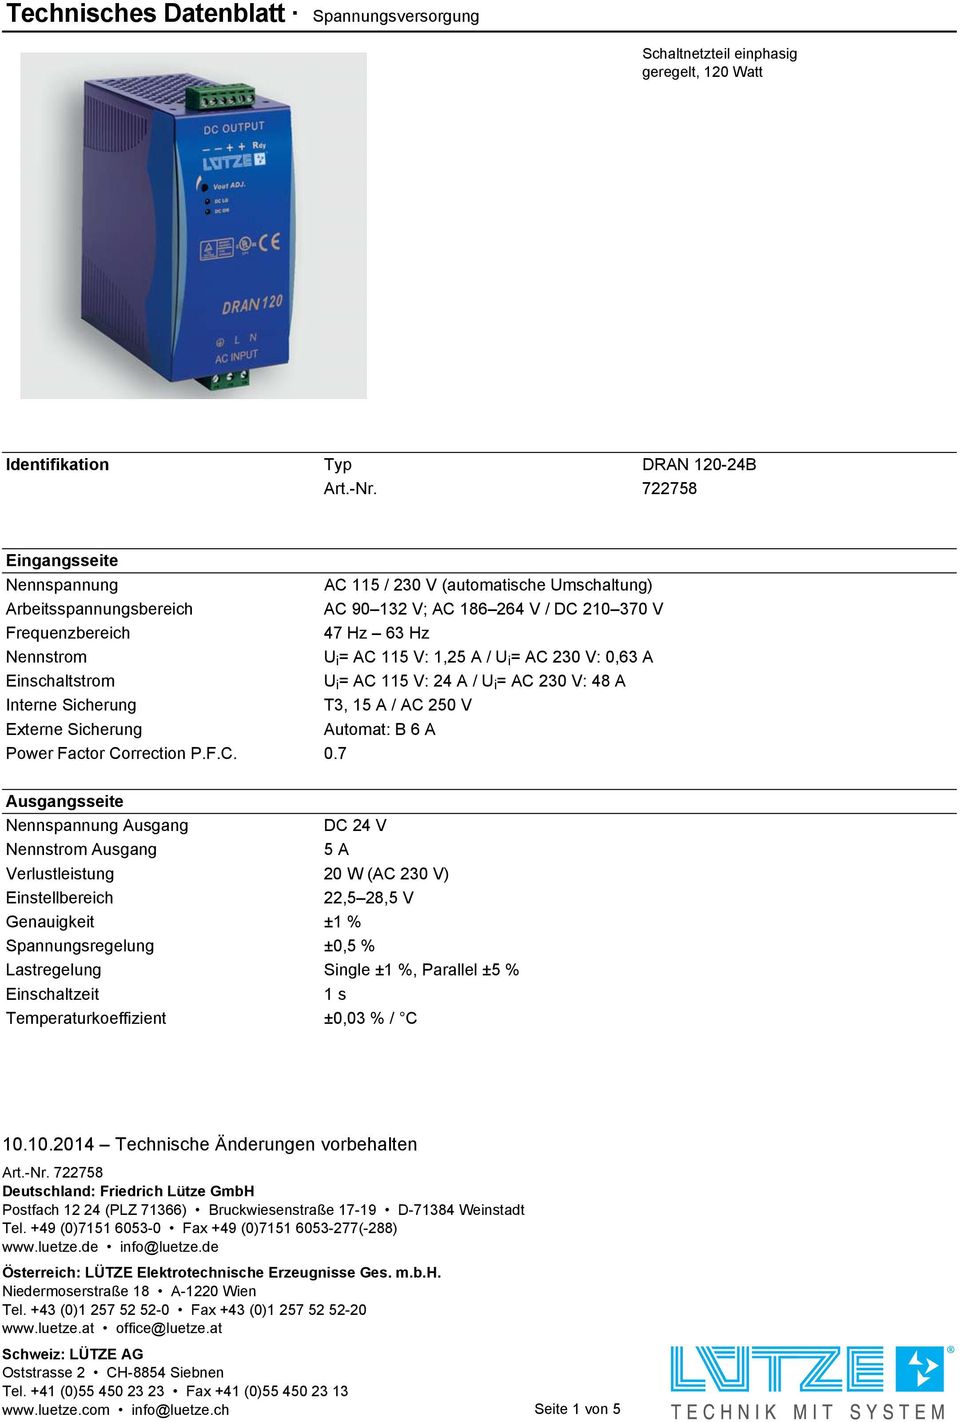 230 V: 48 A Interne Sicherung T3, 15 A / AC 250 V Externe Sicherung Automat: B 6 A Power Factor Correction P.F.C. 0.